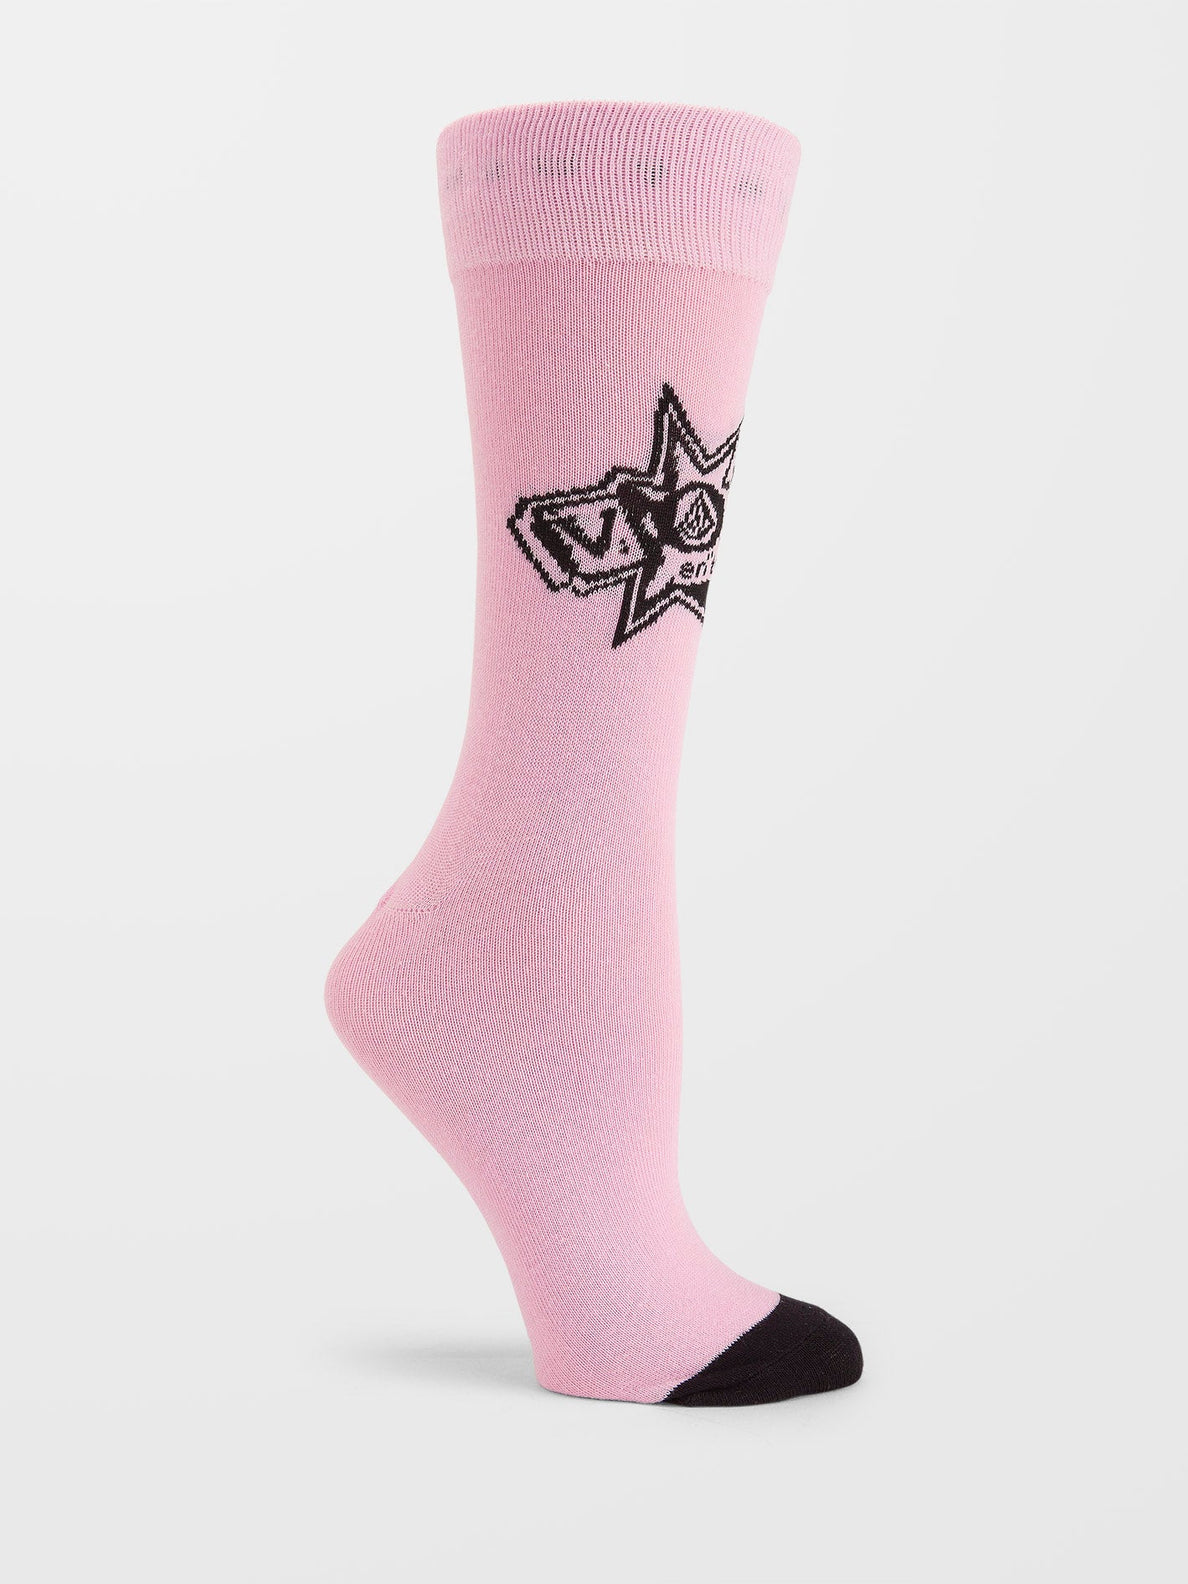 Calcetin Chica Volcom V Ent Sock Premium Reef Pink